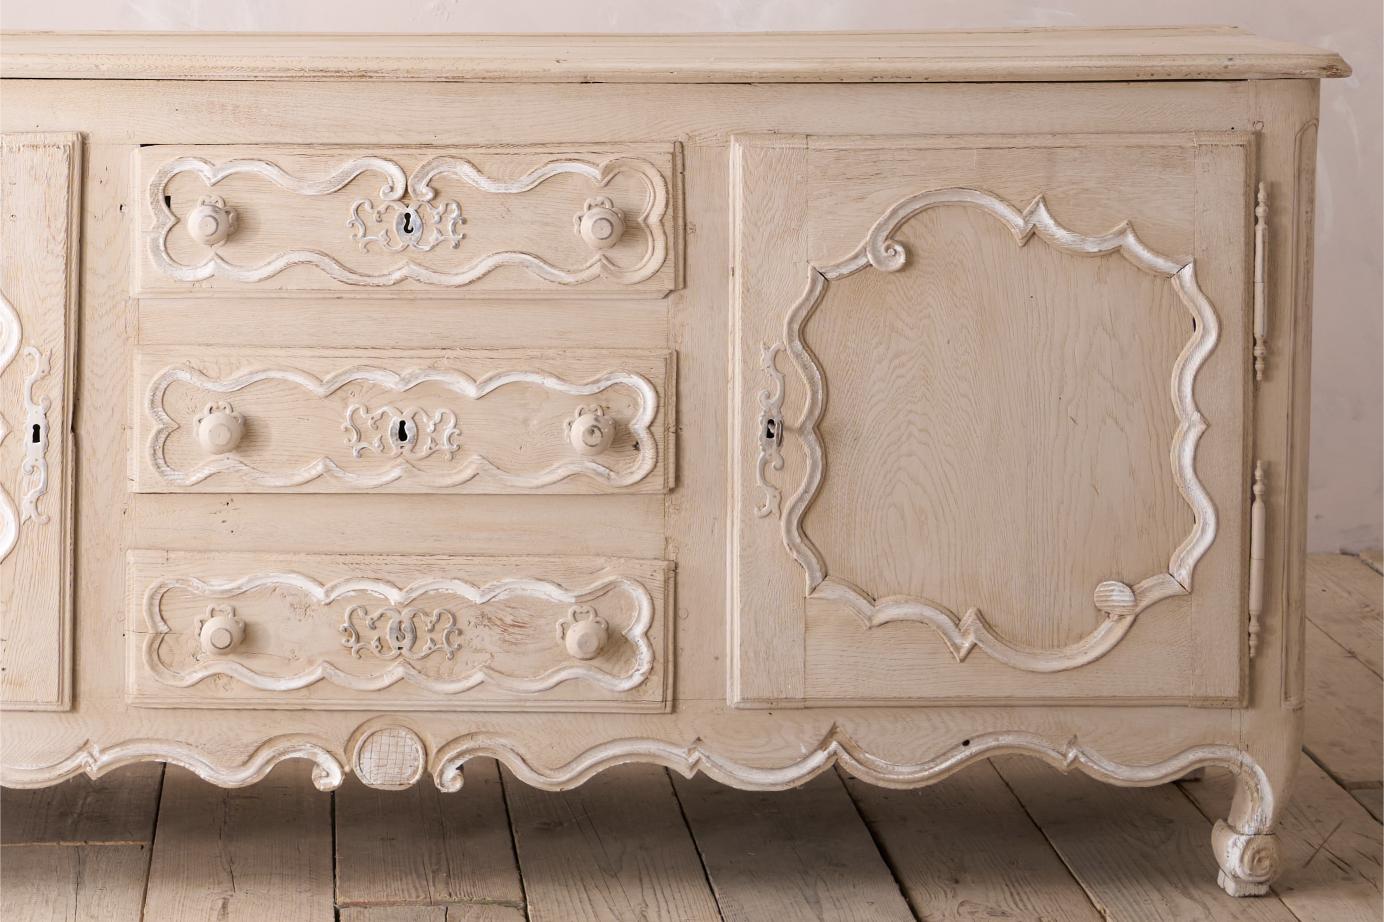 18th century oak sideboard in rustic white paint